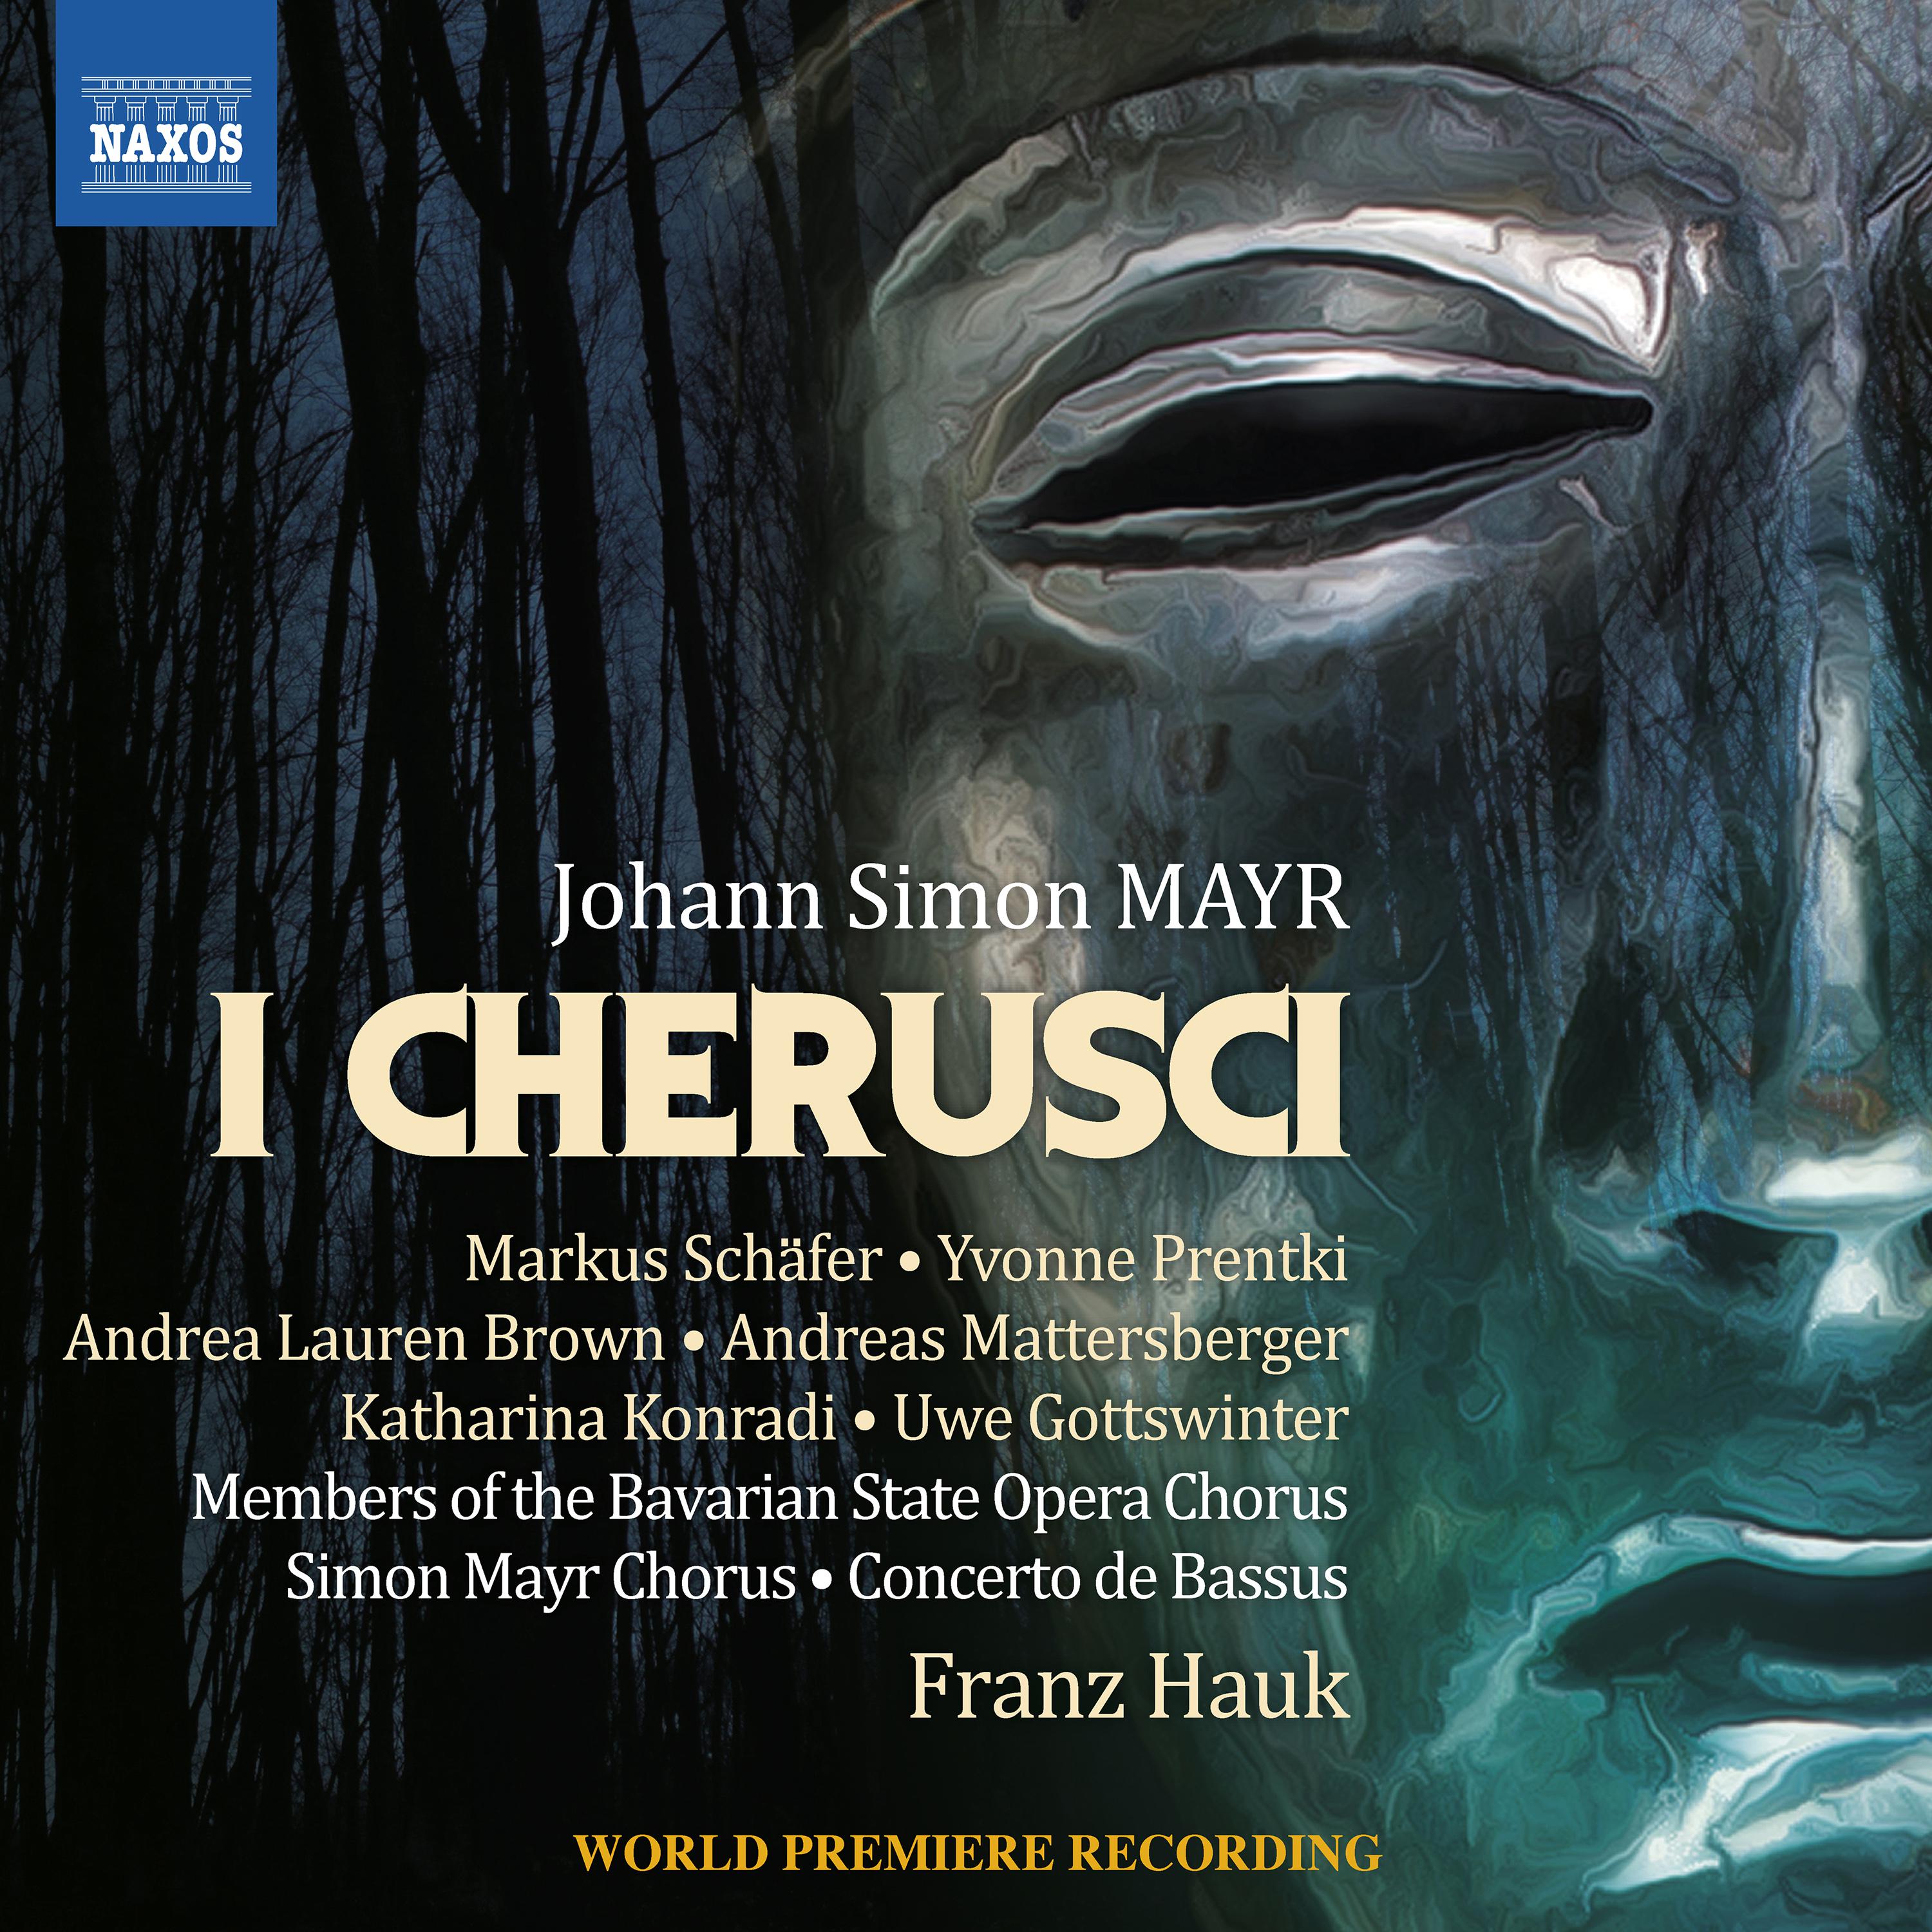 MAYR, J. S.: Cherusci I Opera M. Sch fer, Prentki, A. L. Brown, Bavarian State Opera Chorus, Simon Mayr Choir, Concerto de Bassus, Hauk